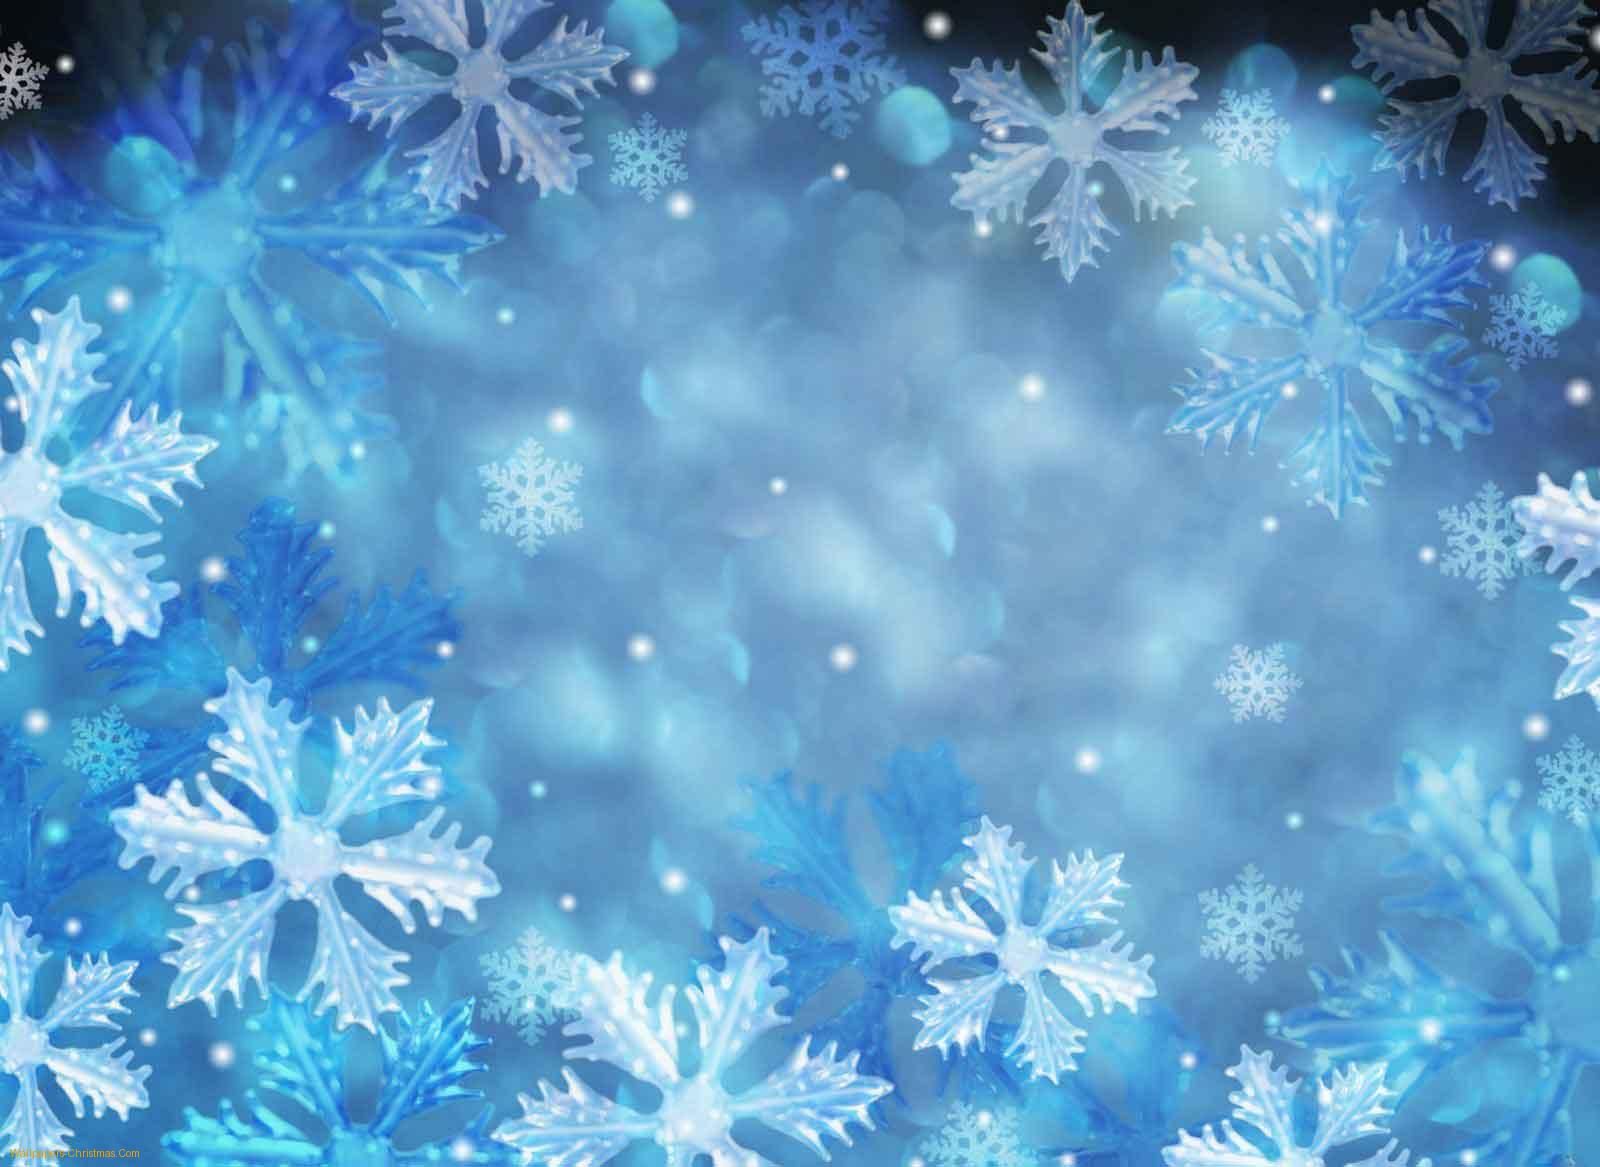 Christmas Snow 35 Background. Wallruru. Snowflake wallpaper, Winter wallpaper, Winter snow wallpaper